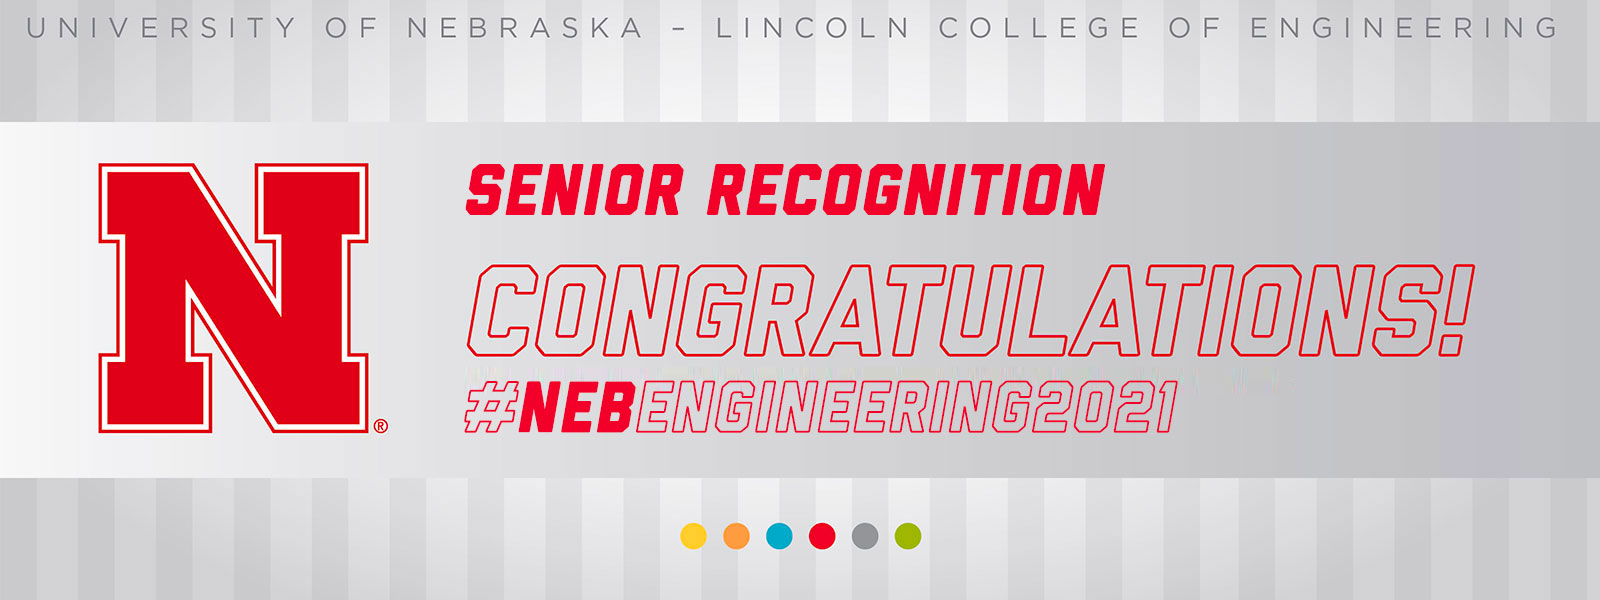 Senior Recognition - Congratulations! #NEBENGINEERING2021